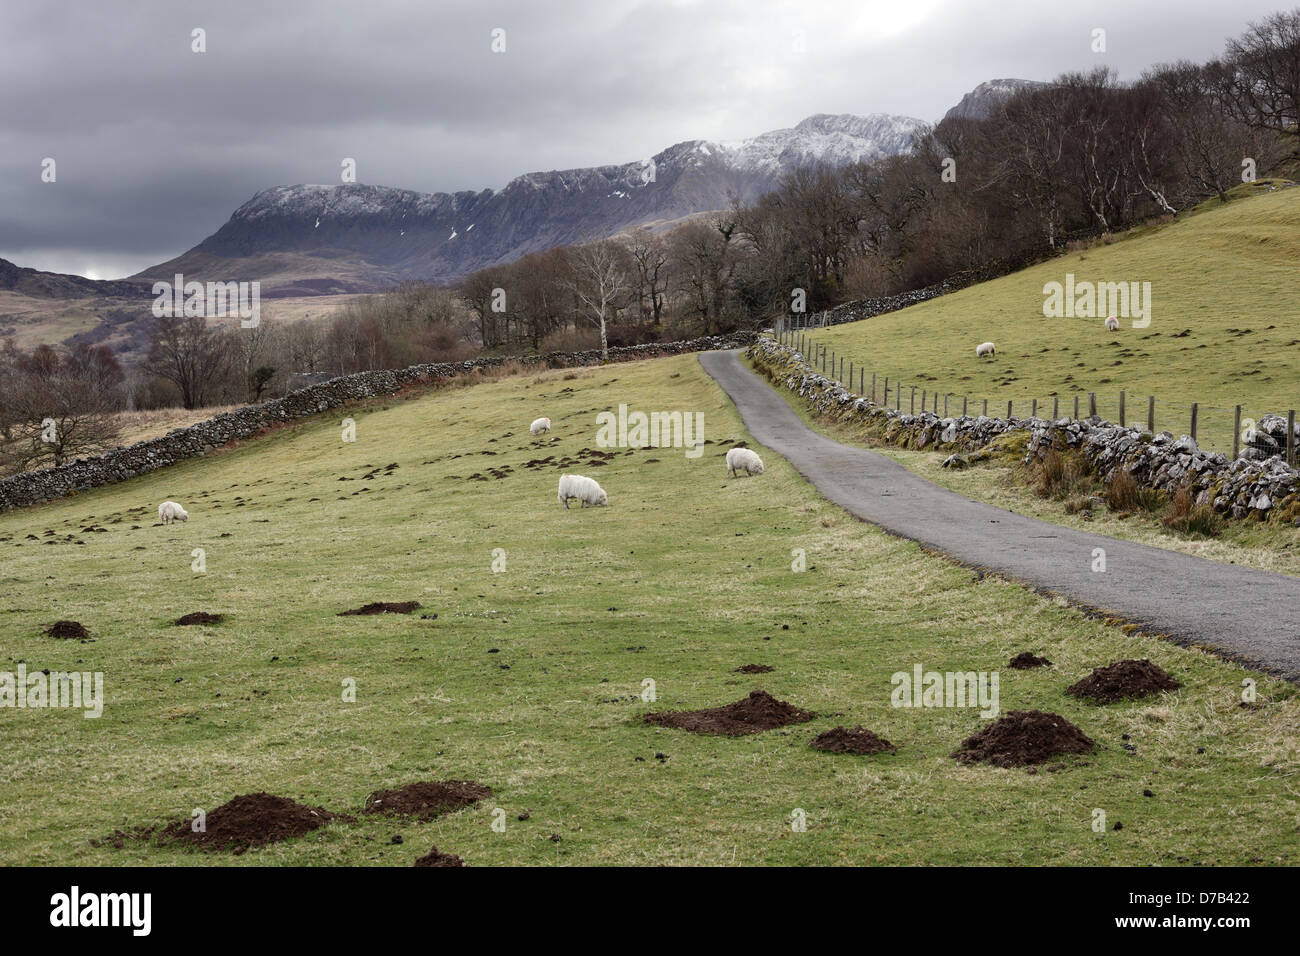 The mountain Cadair Idris in Snowdonia National Park, Gwynedd, Wales, April 2013 Stock Photo